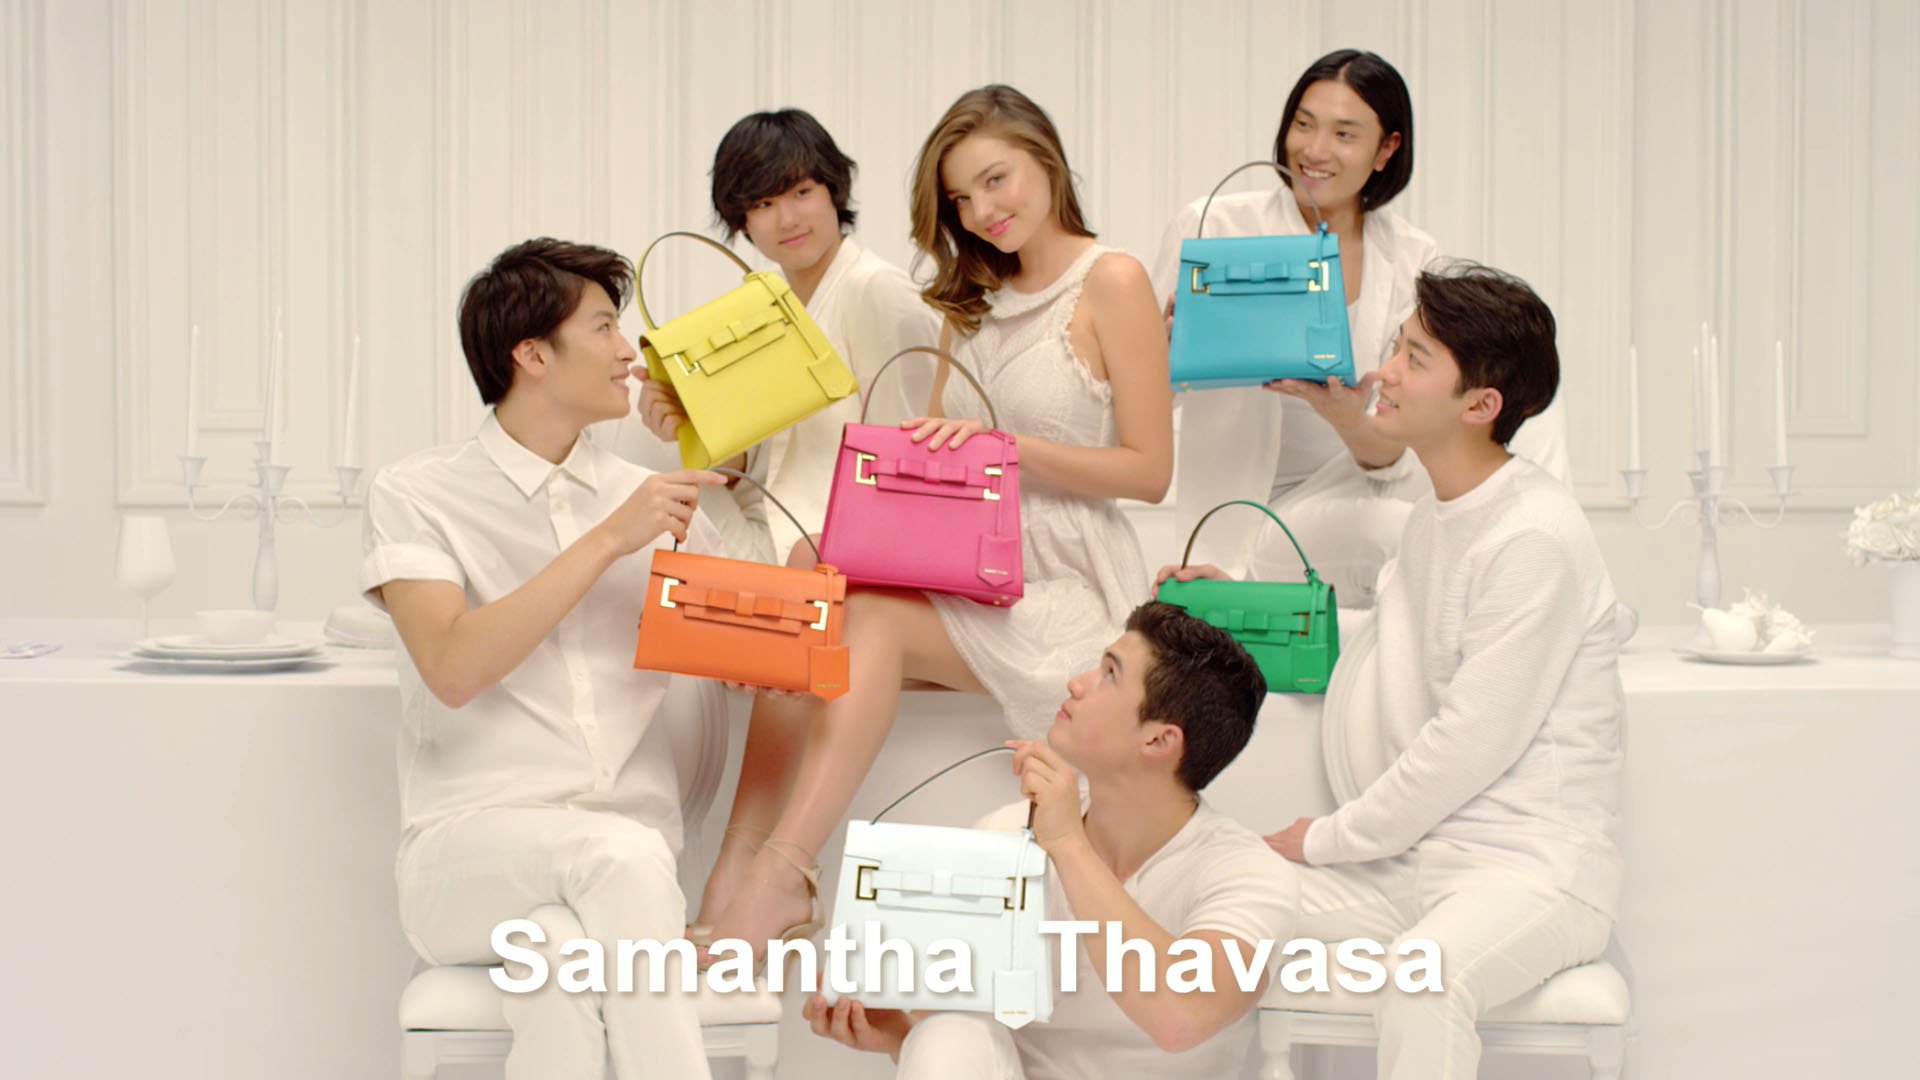 Samantha Thavasa Commercial Featuring Miranda Kerr Joshua Reis